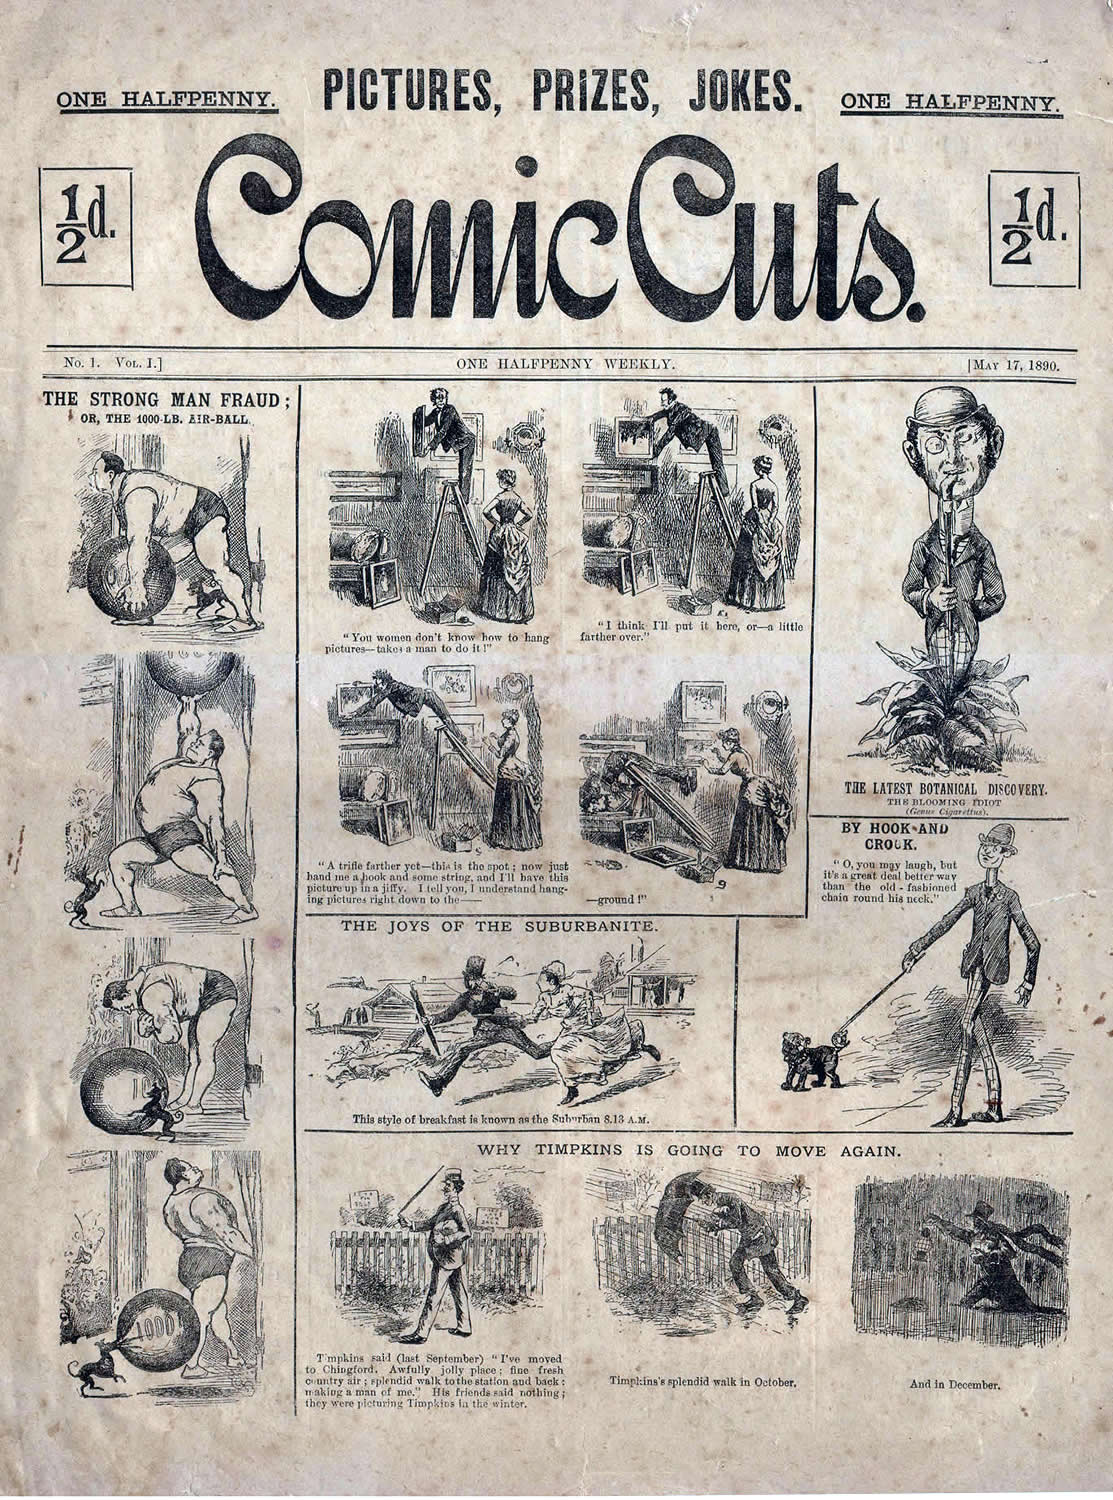 Comic Cuts | UK Comics Wiki | FANDOM powered by Wikia1113 x 1500